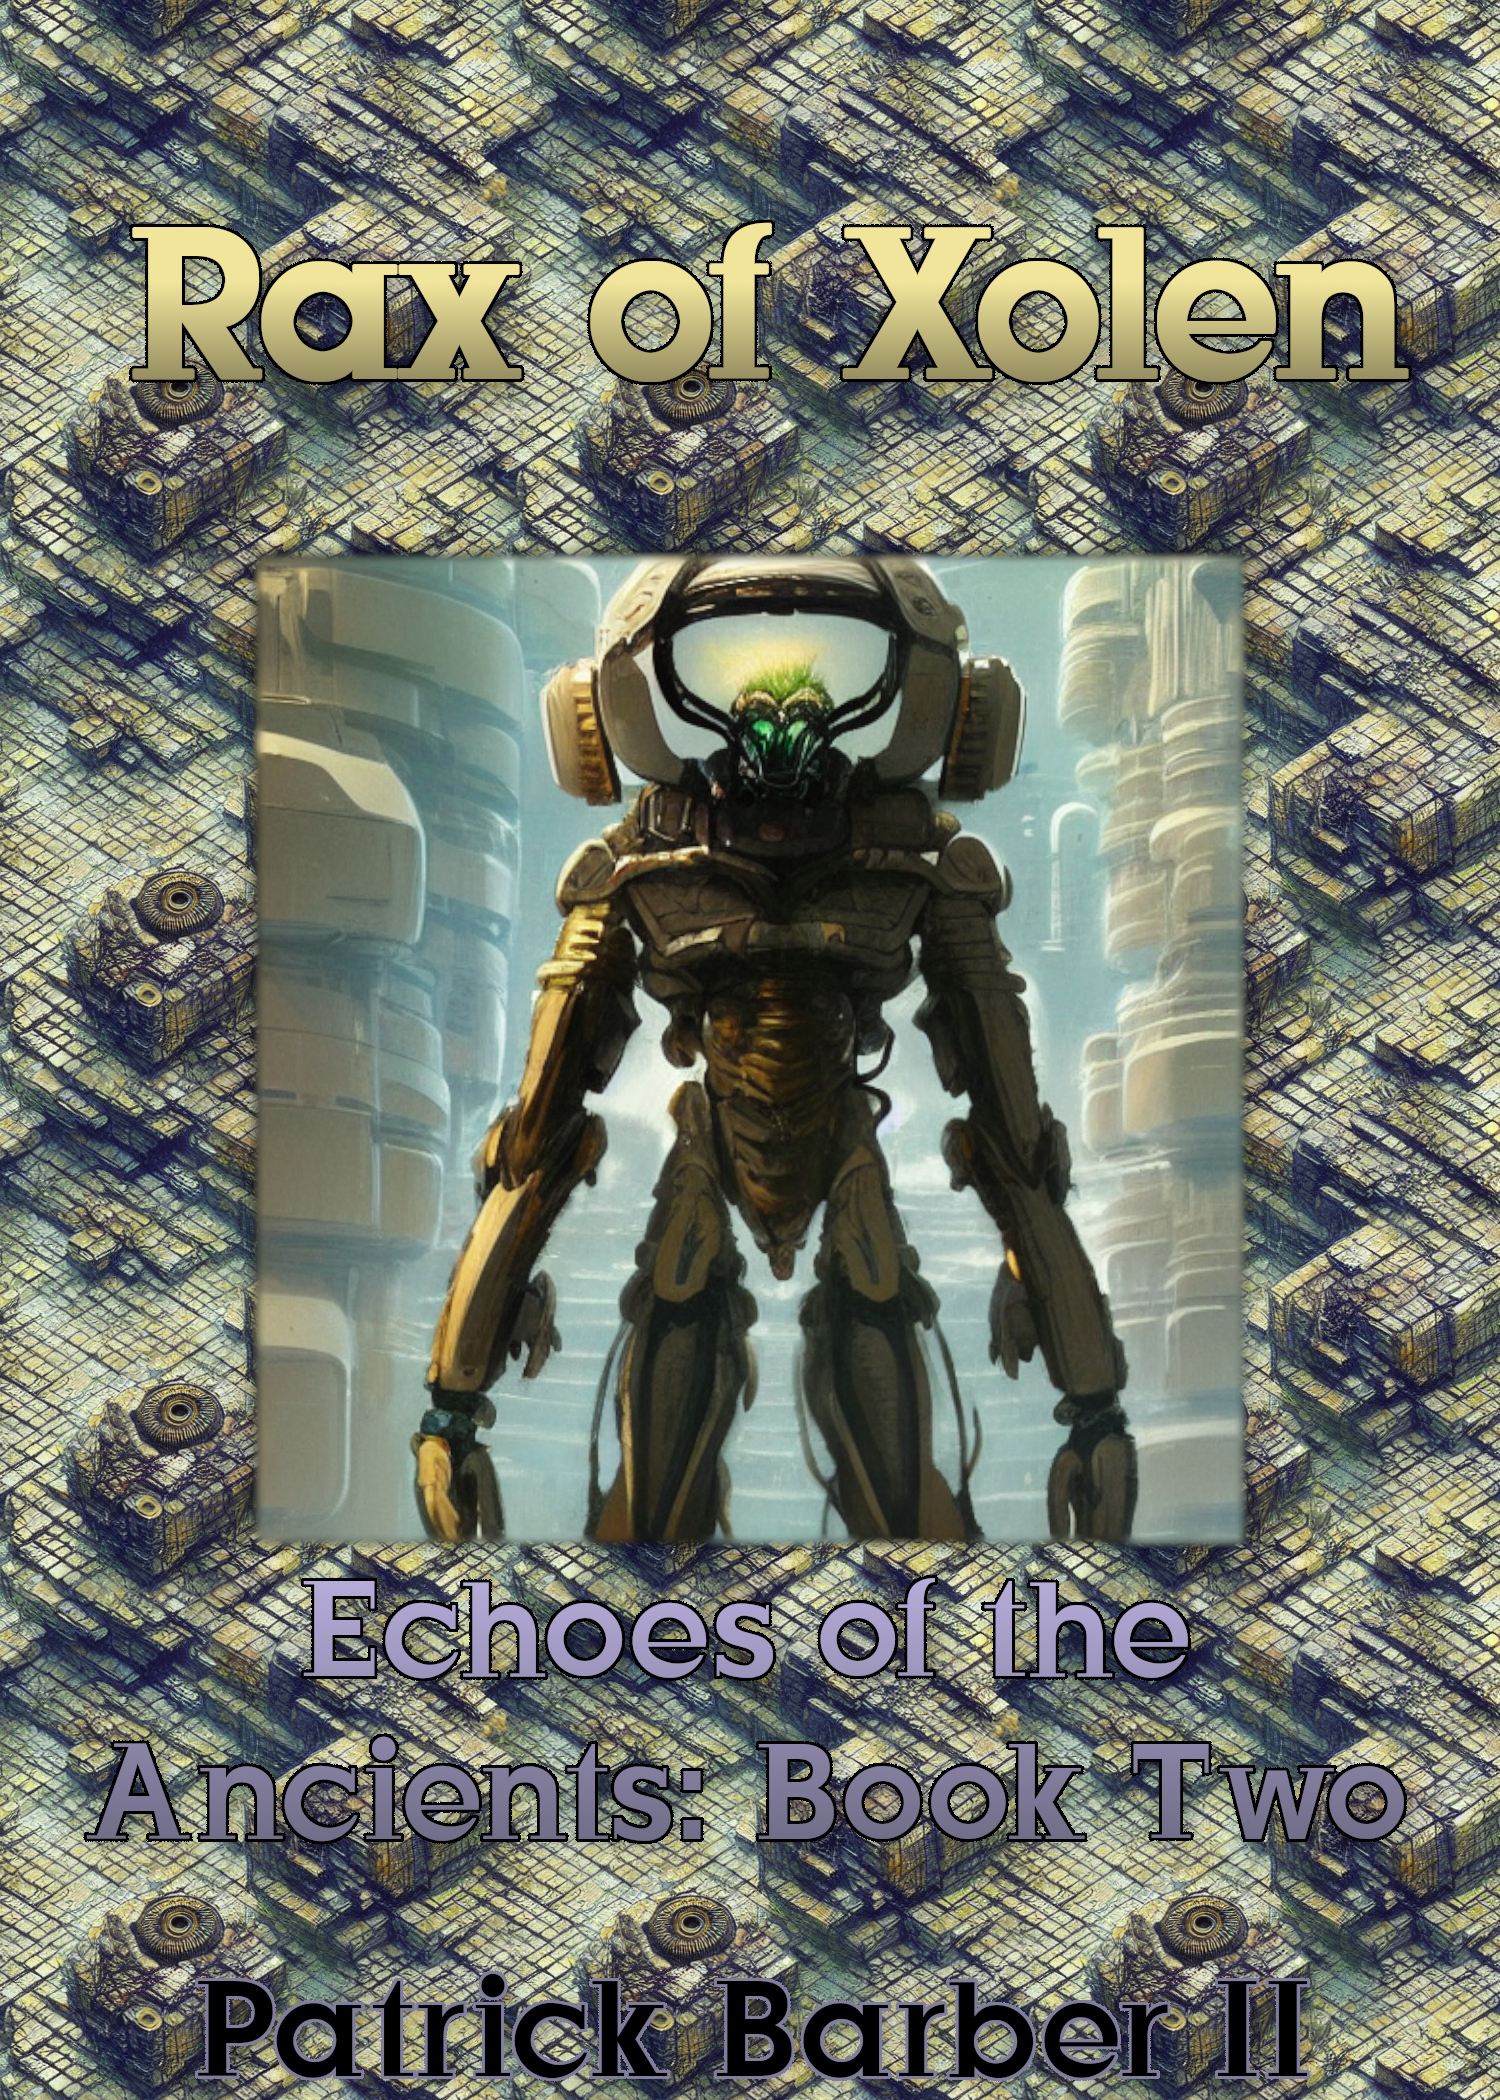 Rax of Xolen by Patrick Barber II